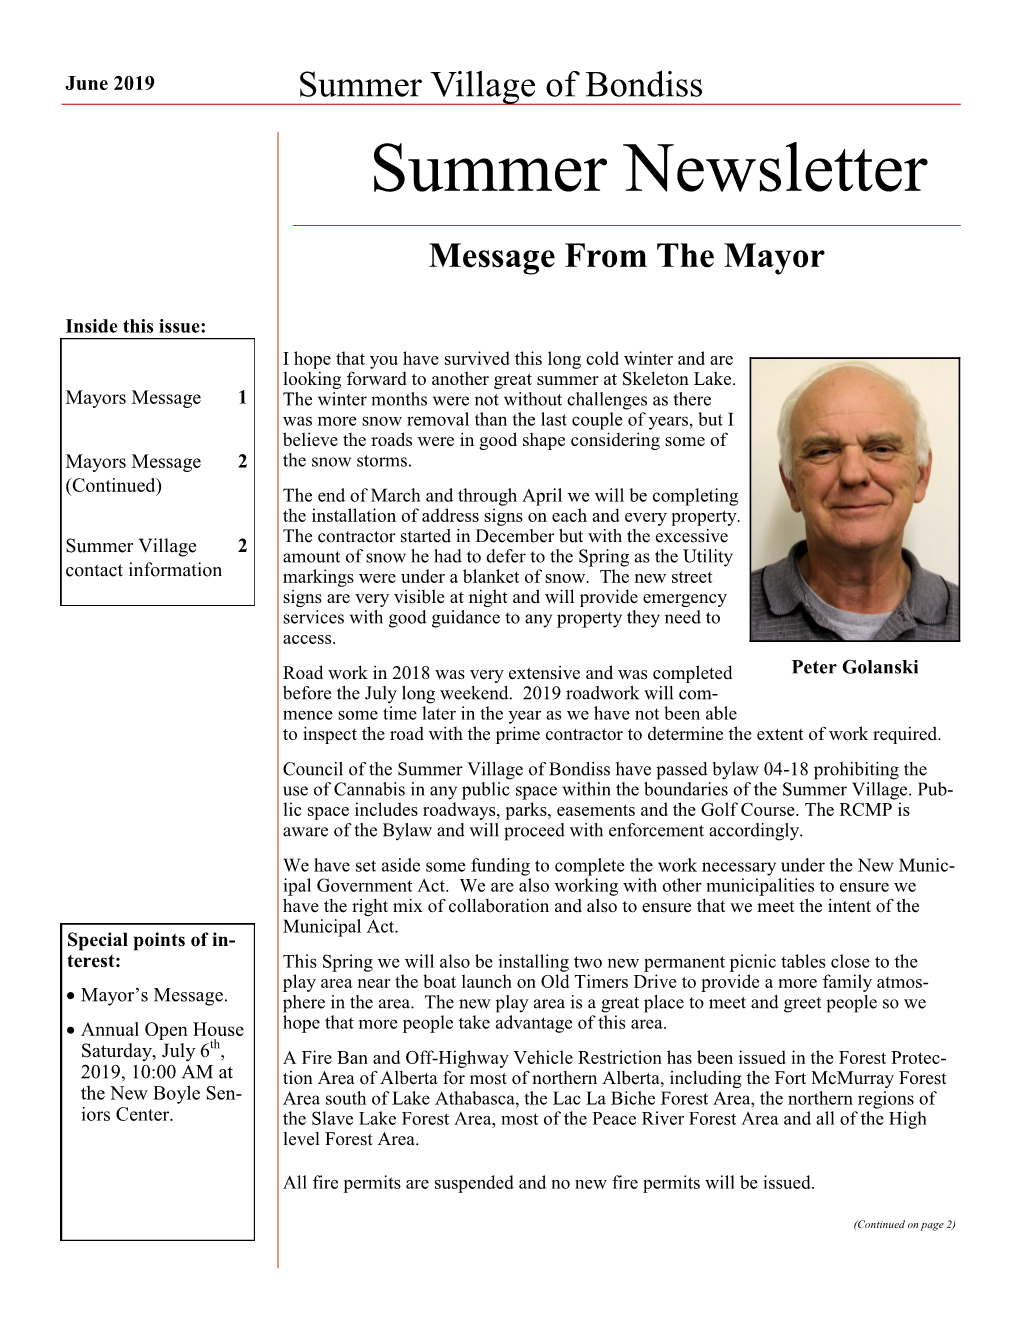 Summer Village of Bondiss Summer Newsletter Message from the Mayor